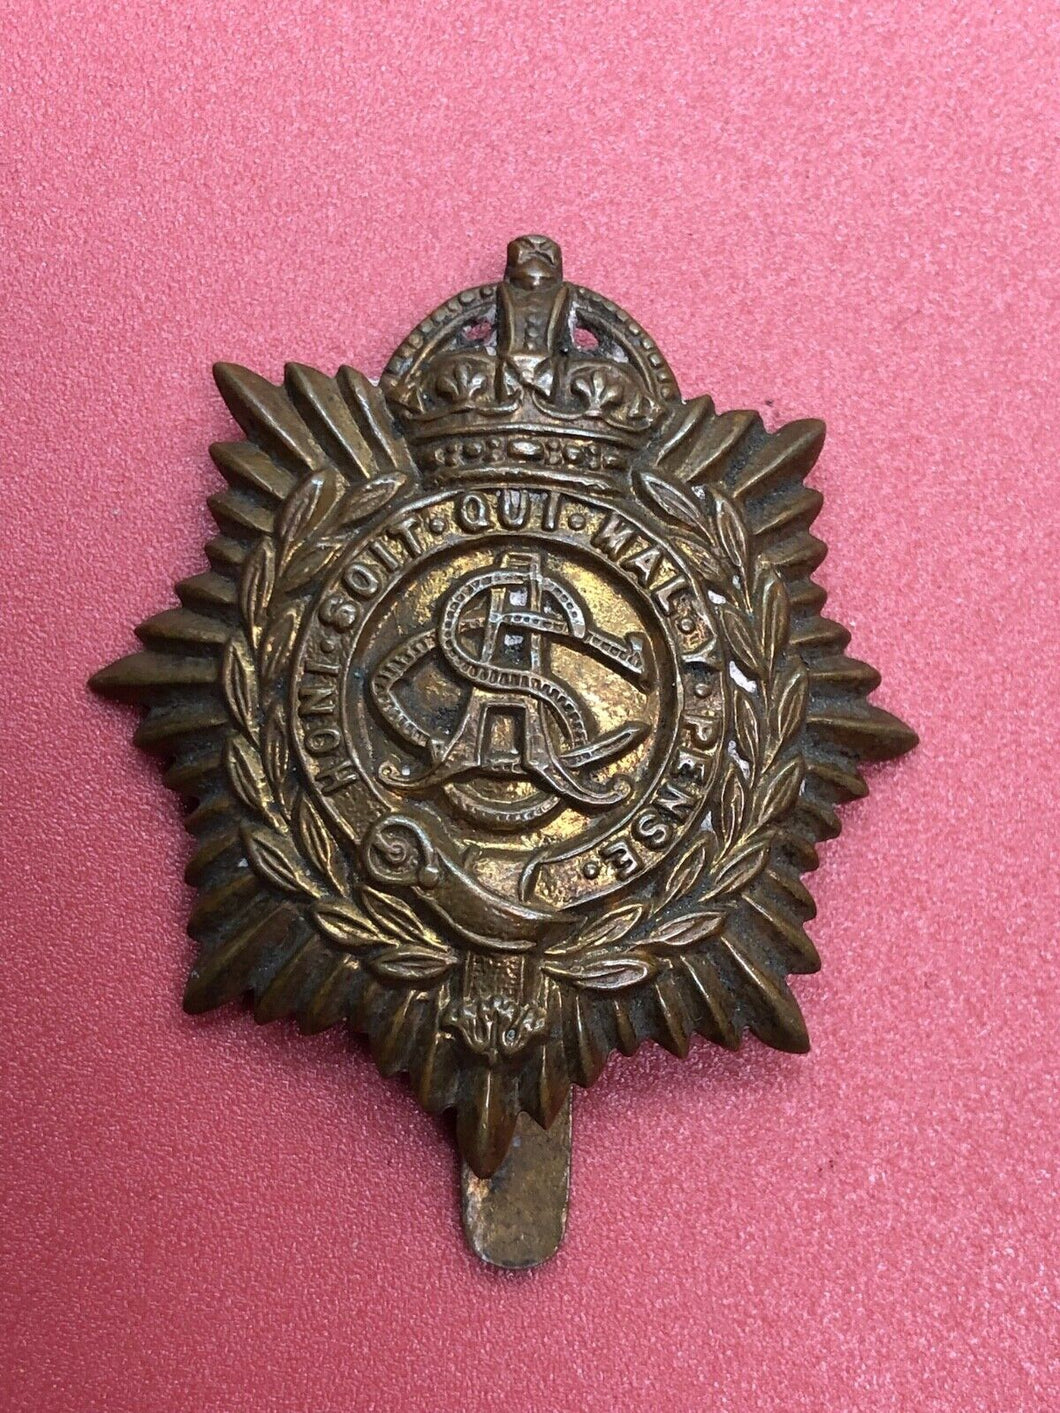 Original WW1 British Army Cap Badge - Royal Army Service Corps - RASC